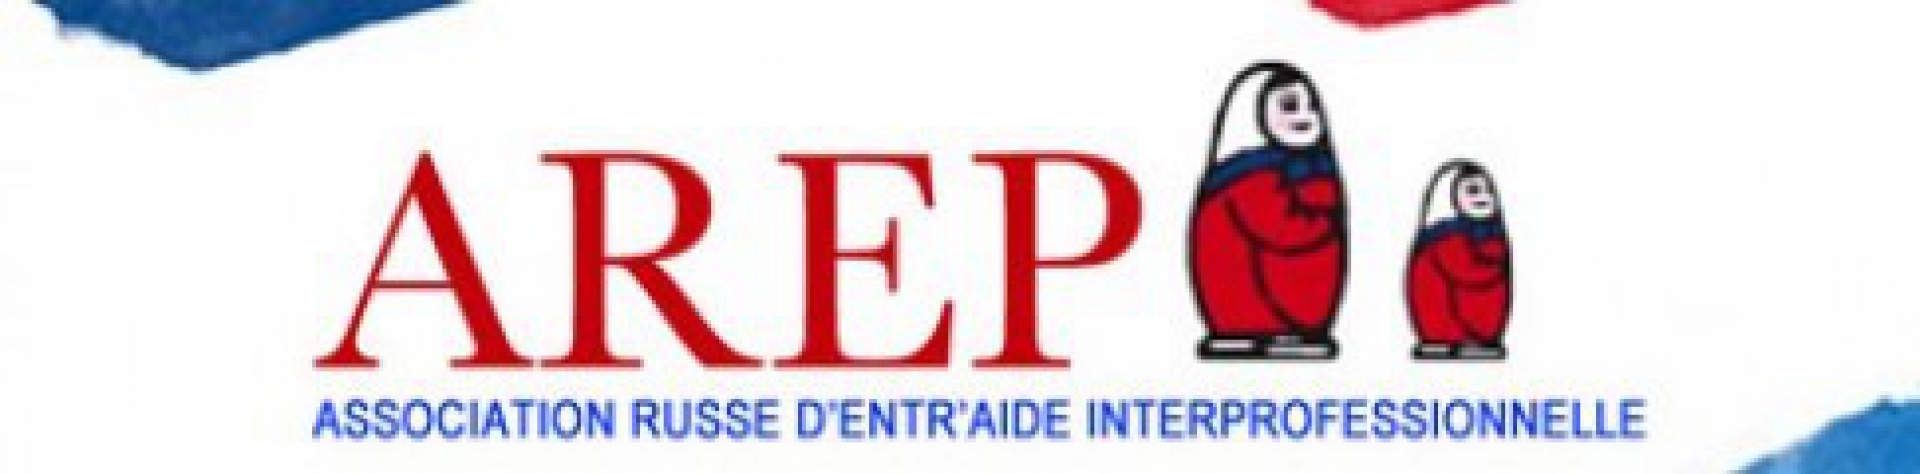 Logo AREP